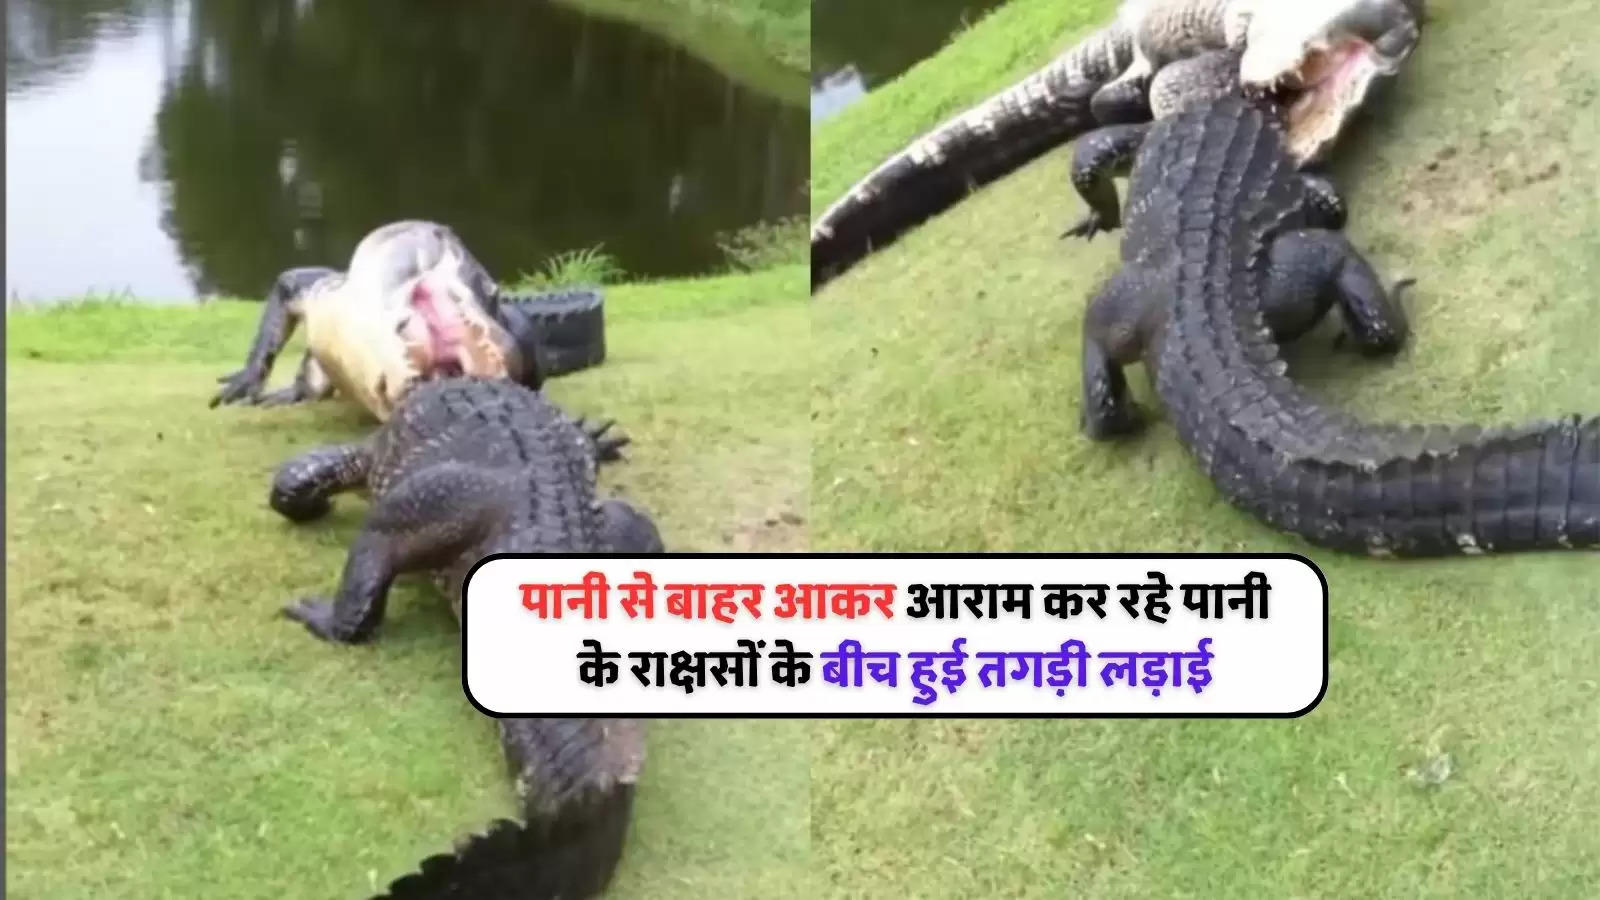 Crocodile versus crocodile